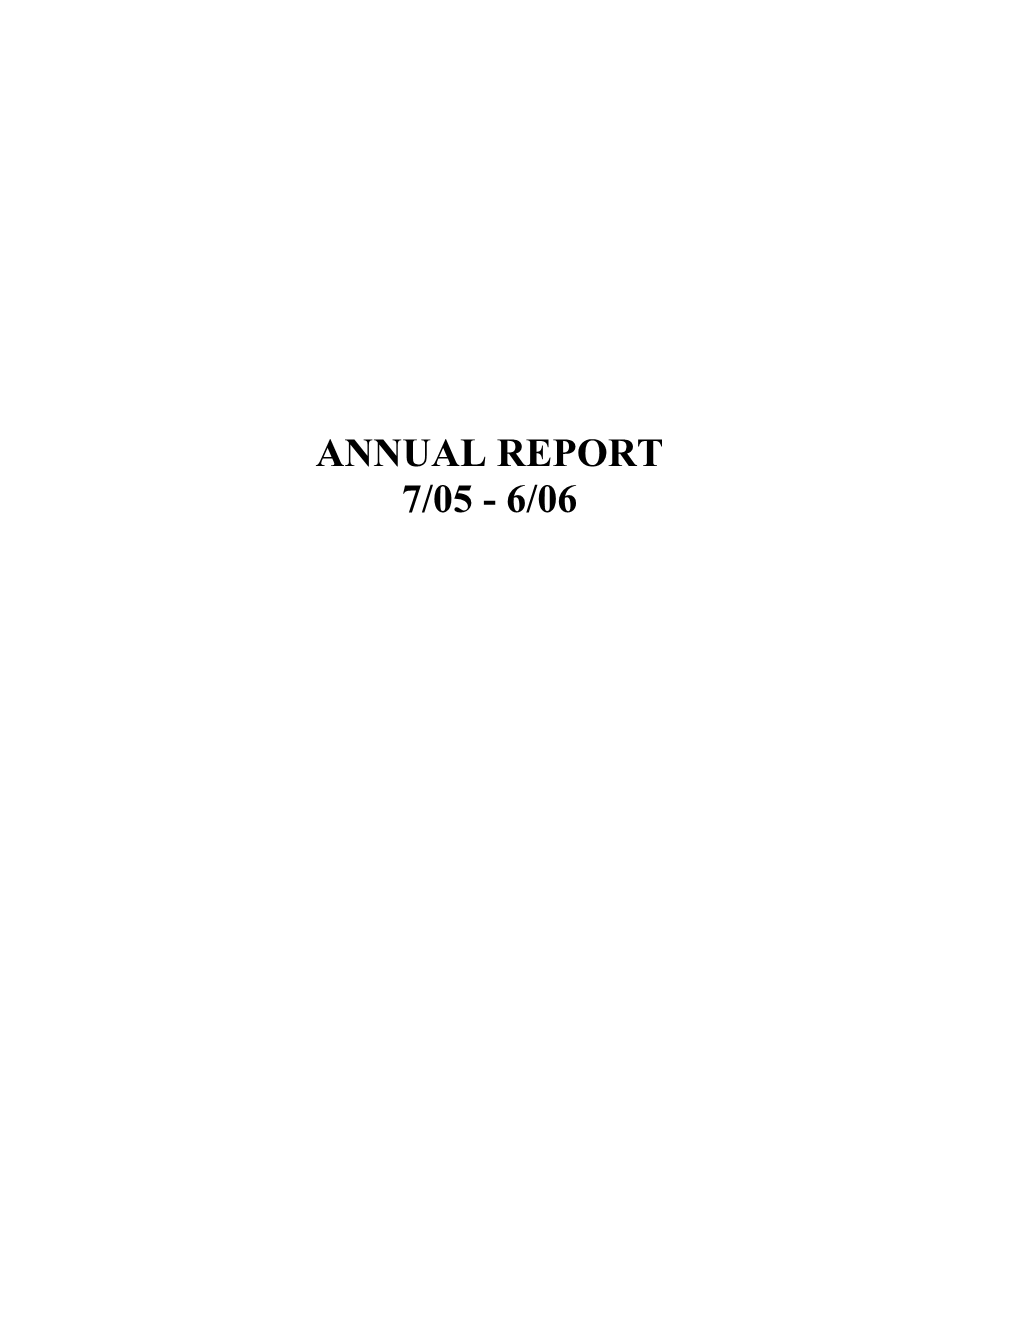 Annual Report 7/05 - 6/06